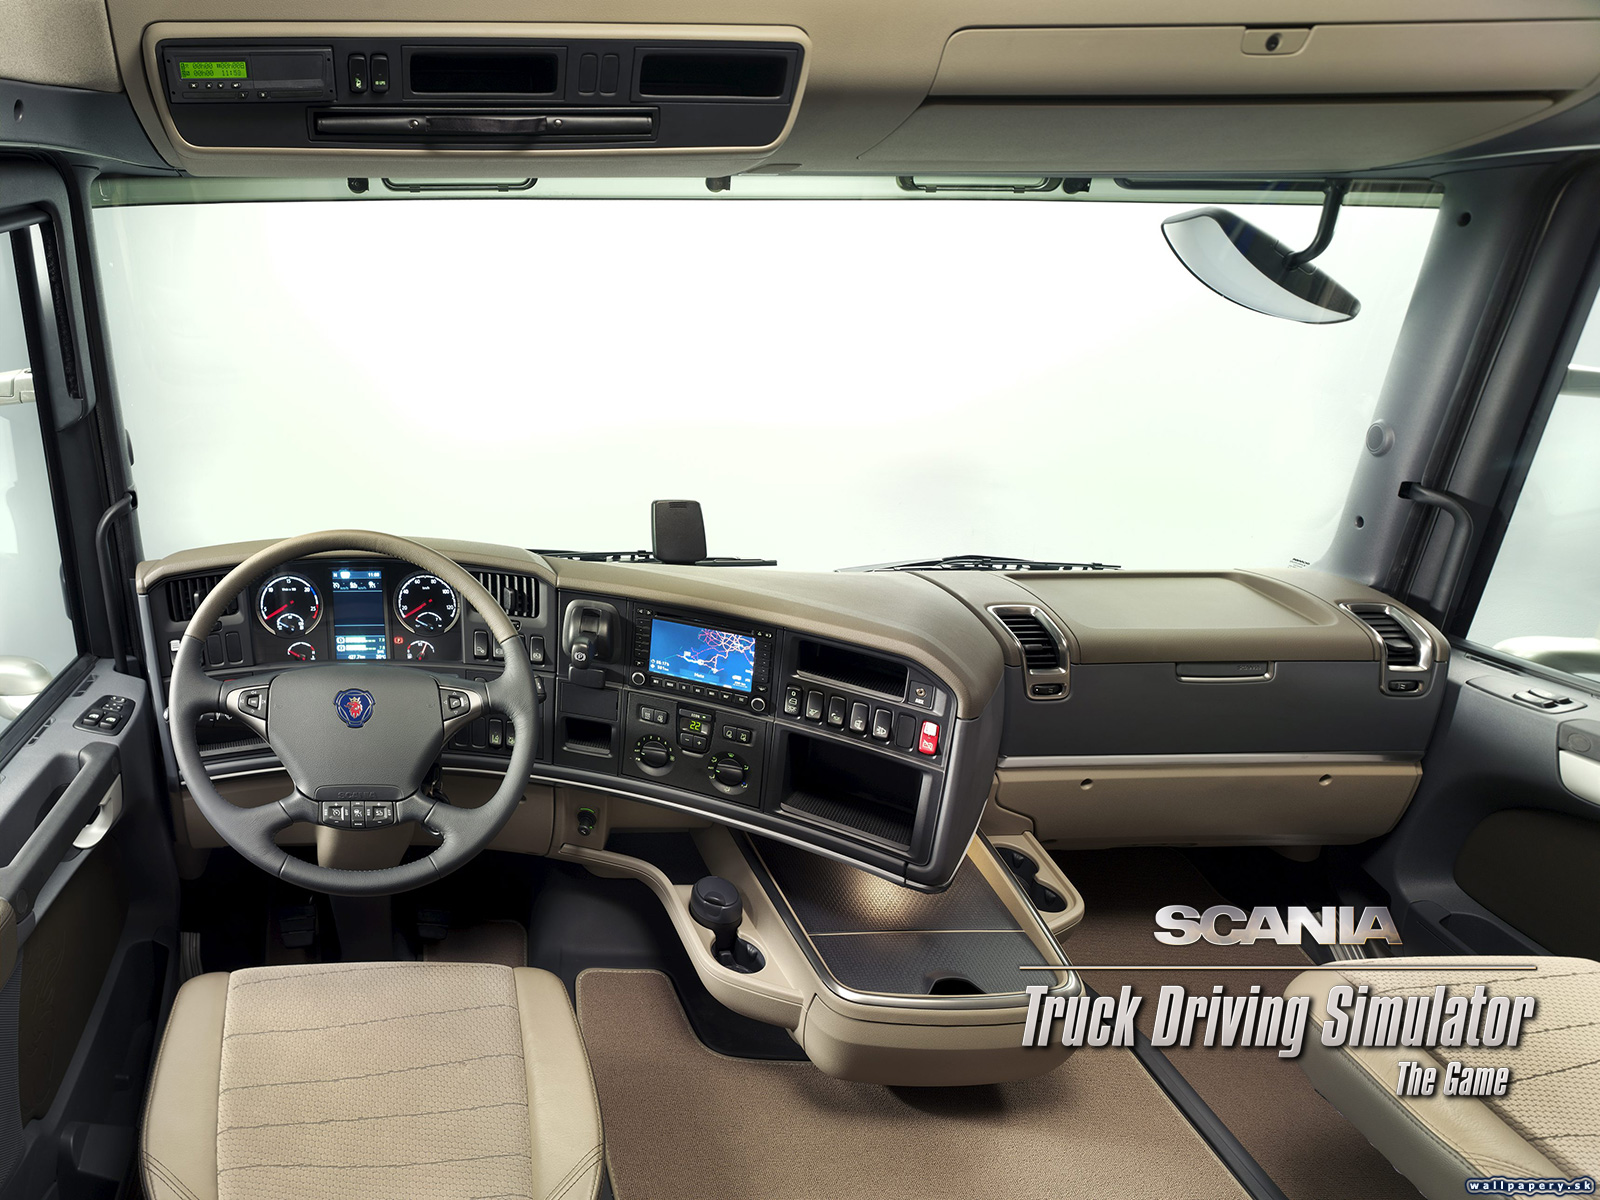 Scania Truck Driving Simulator - The Game - wallpaper 7